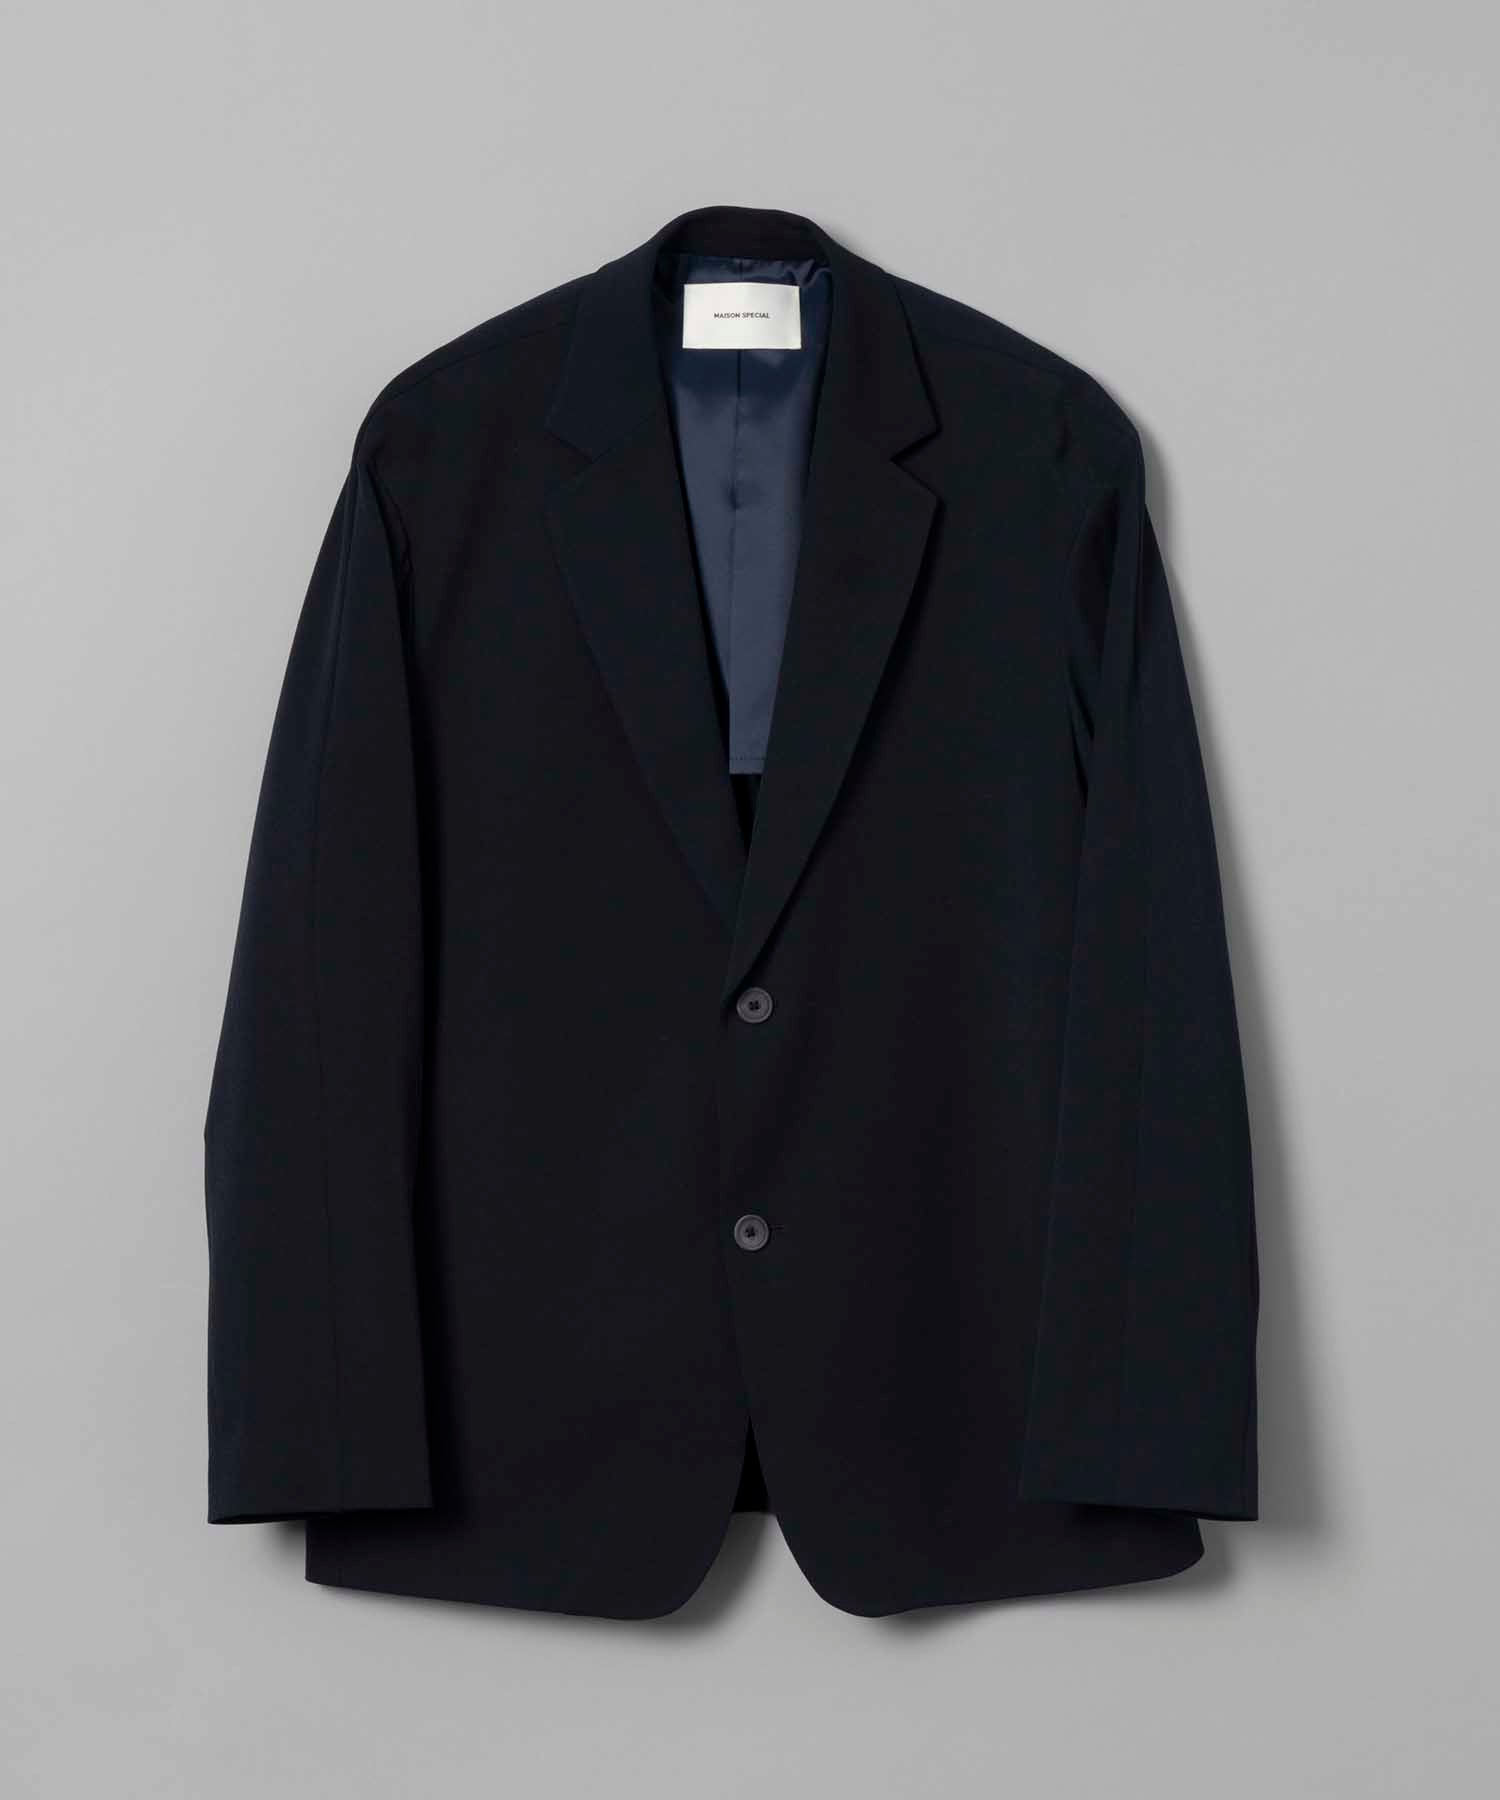 OUTLAST Split Raglan Dress-Over Single Tailored Jacket